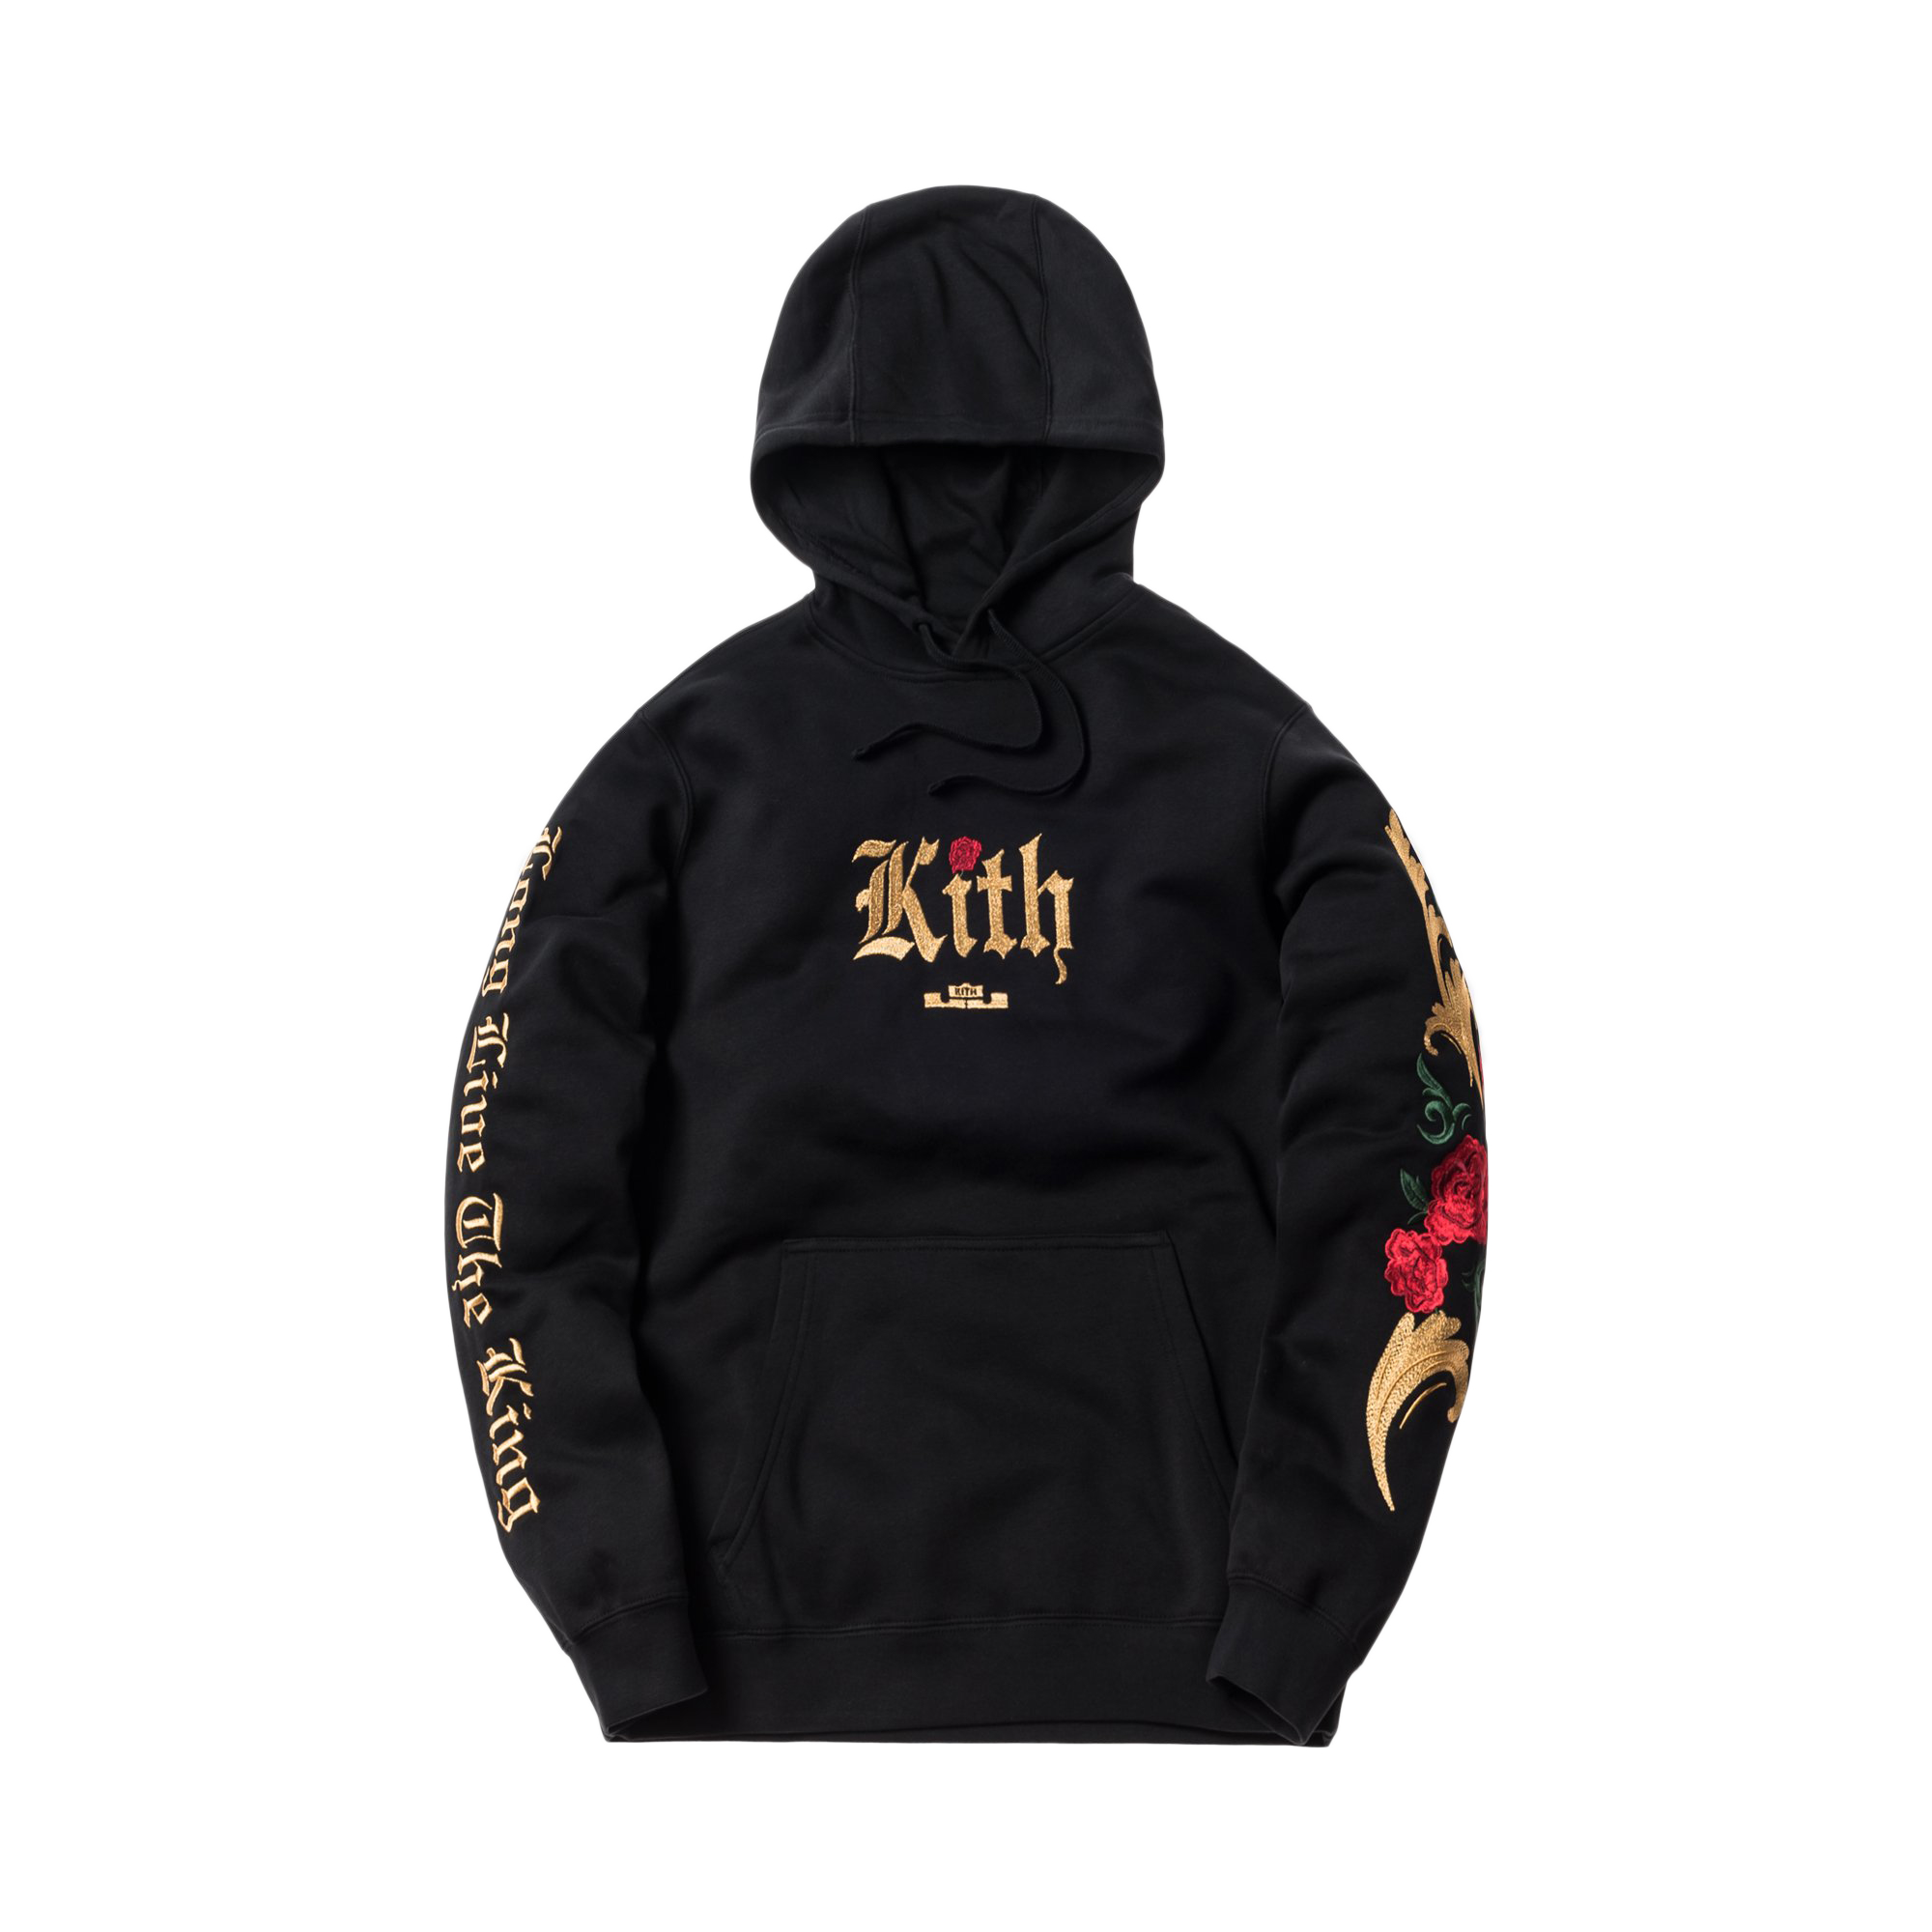 kith lebron hoodie